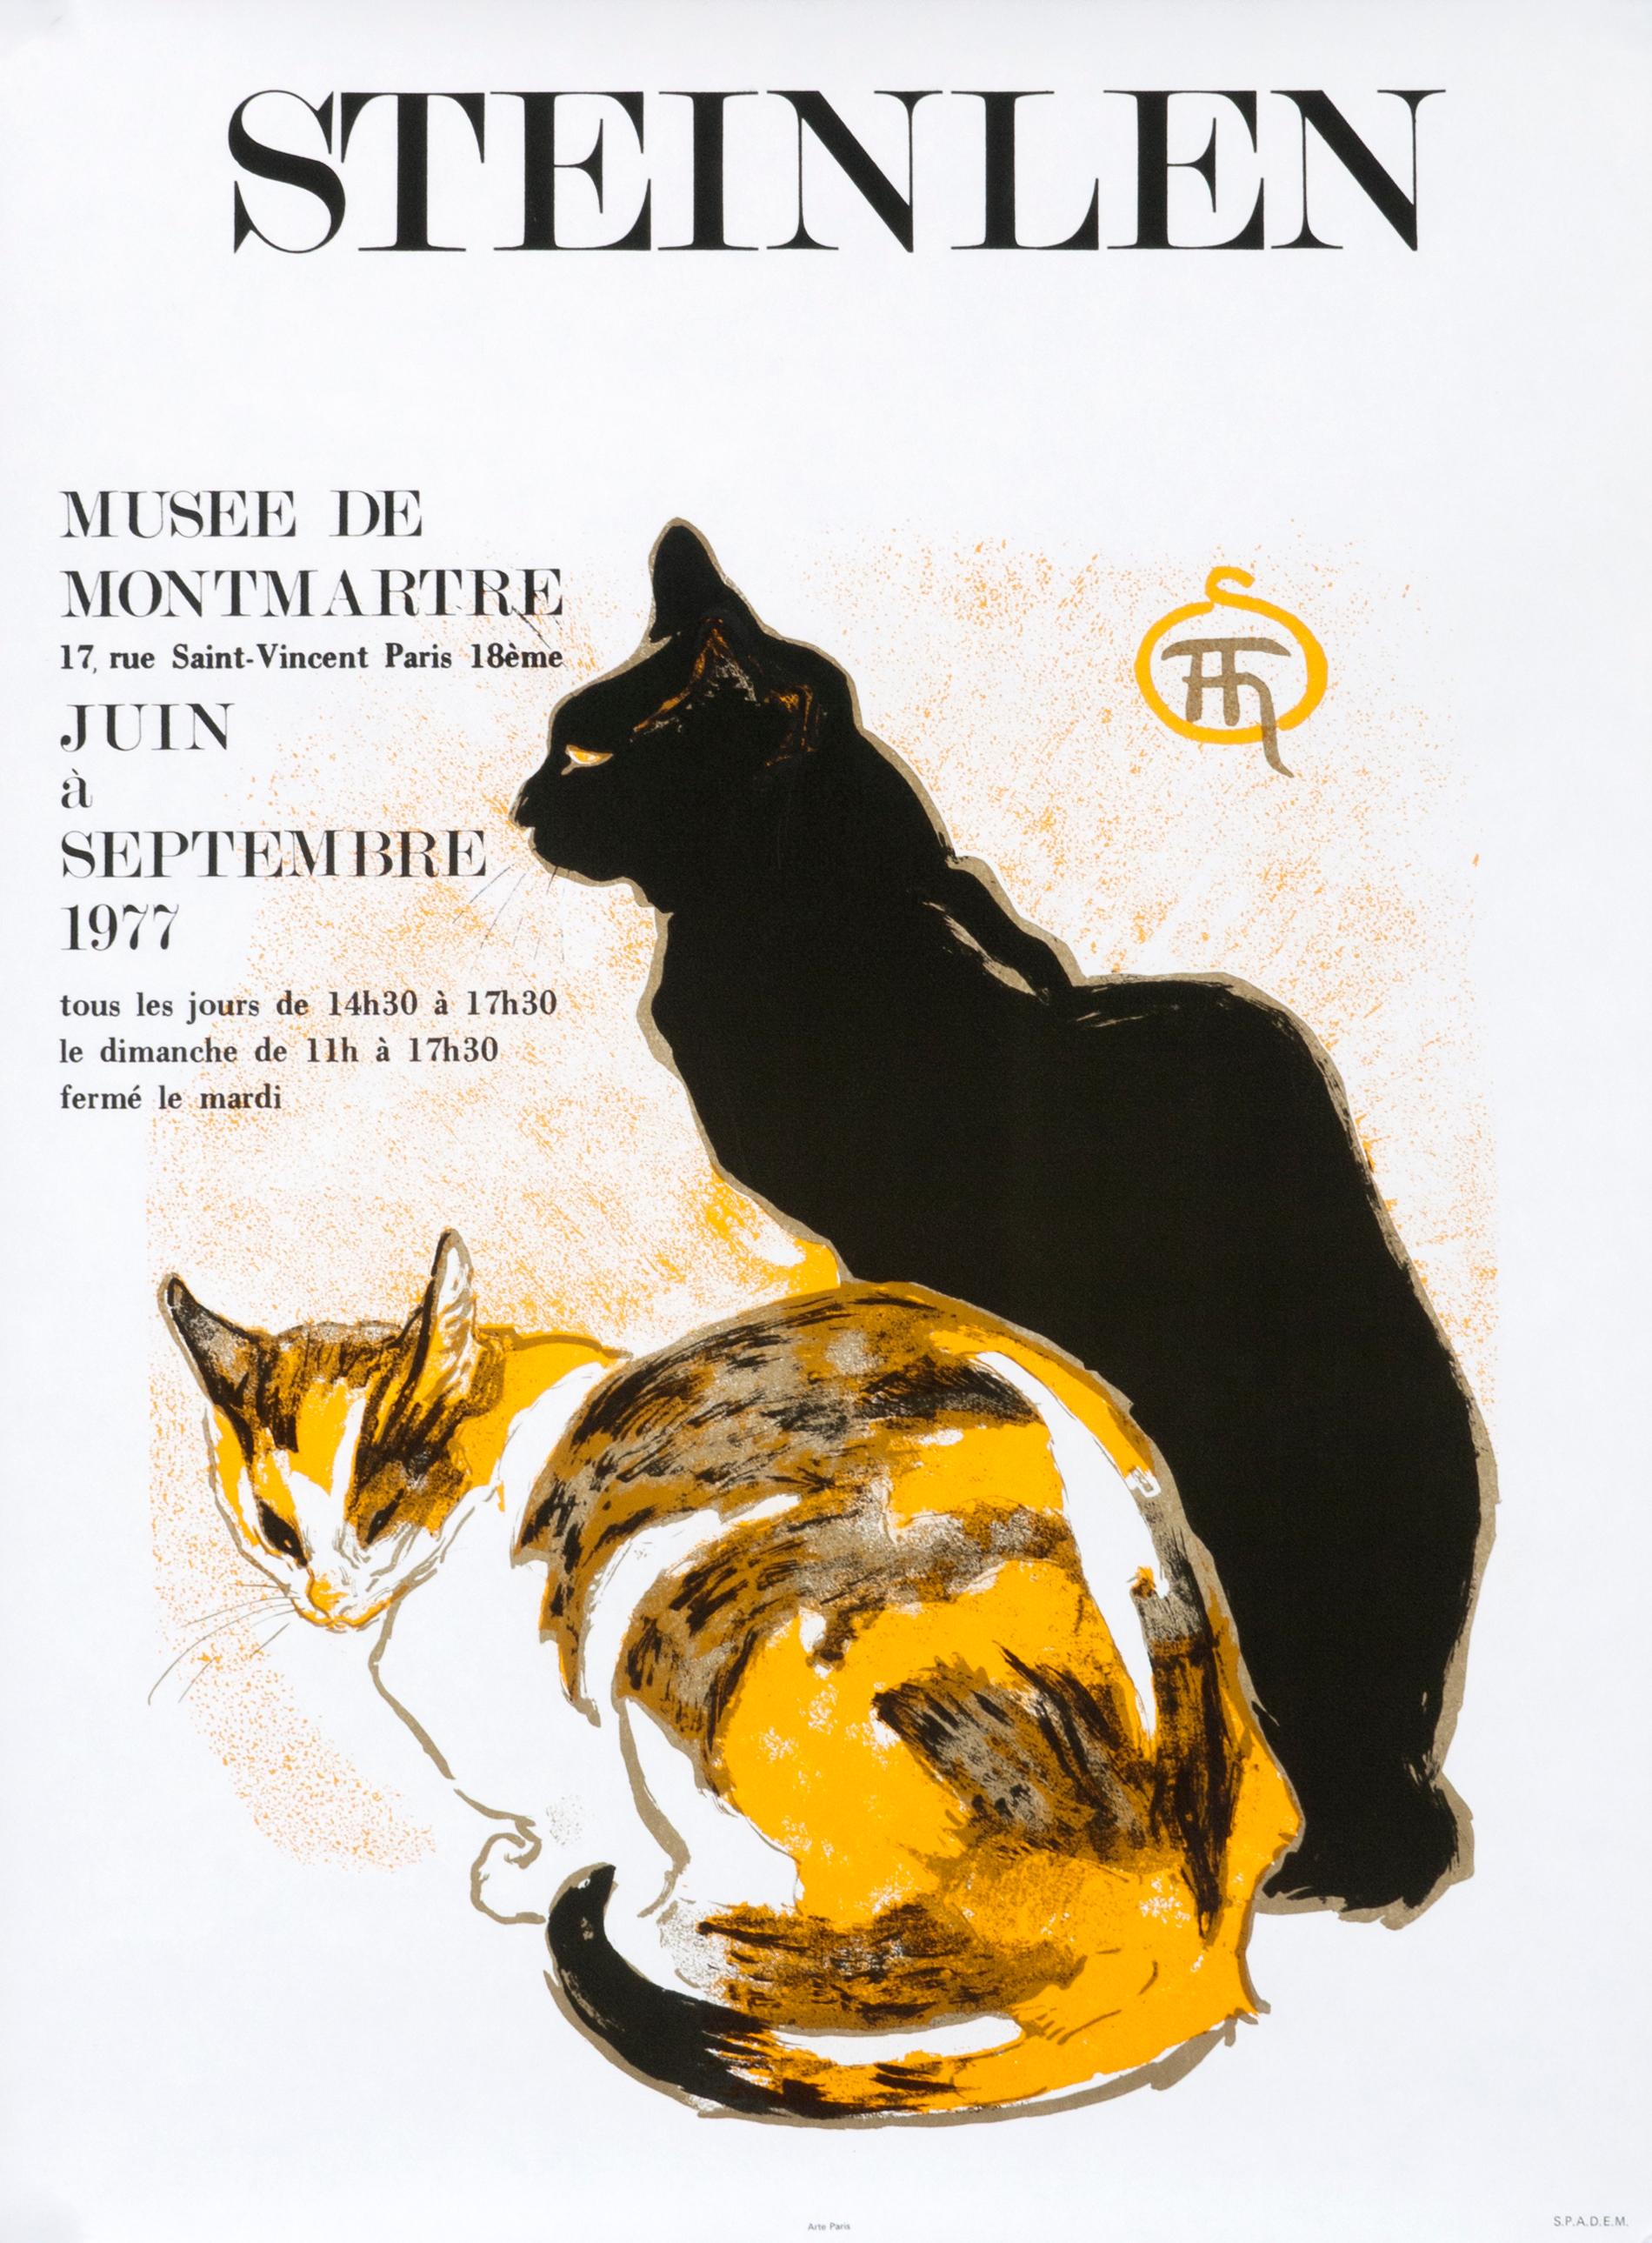 "Steinlen - Musee de Montmartre Paris" Art Nouveau Cat Original Poster - Print by Théophile Alexandre Steinlen